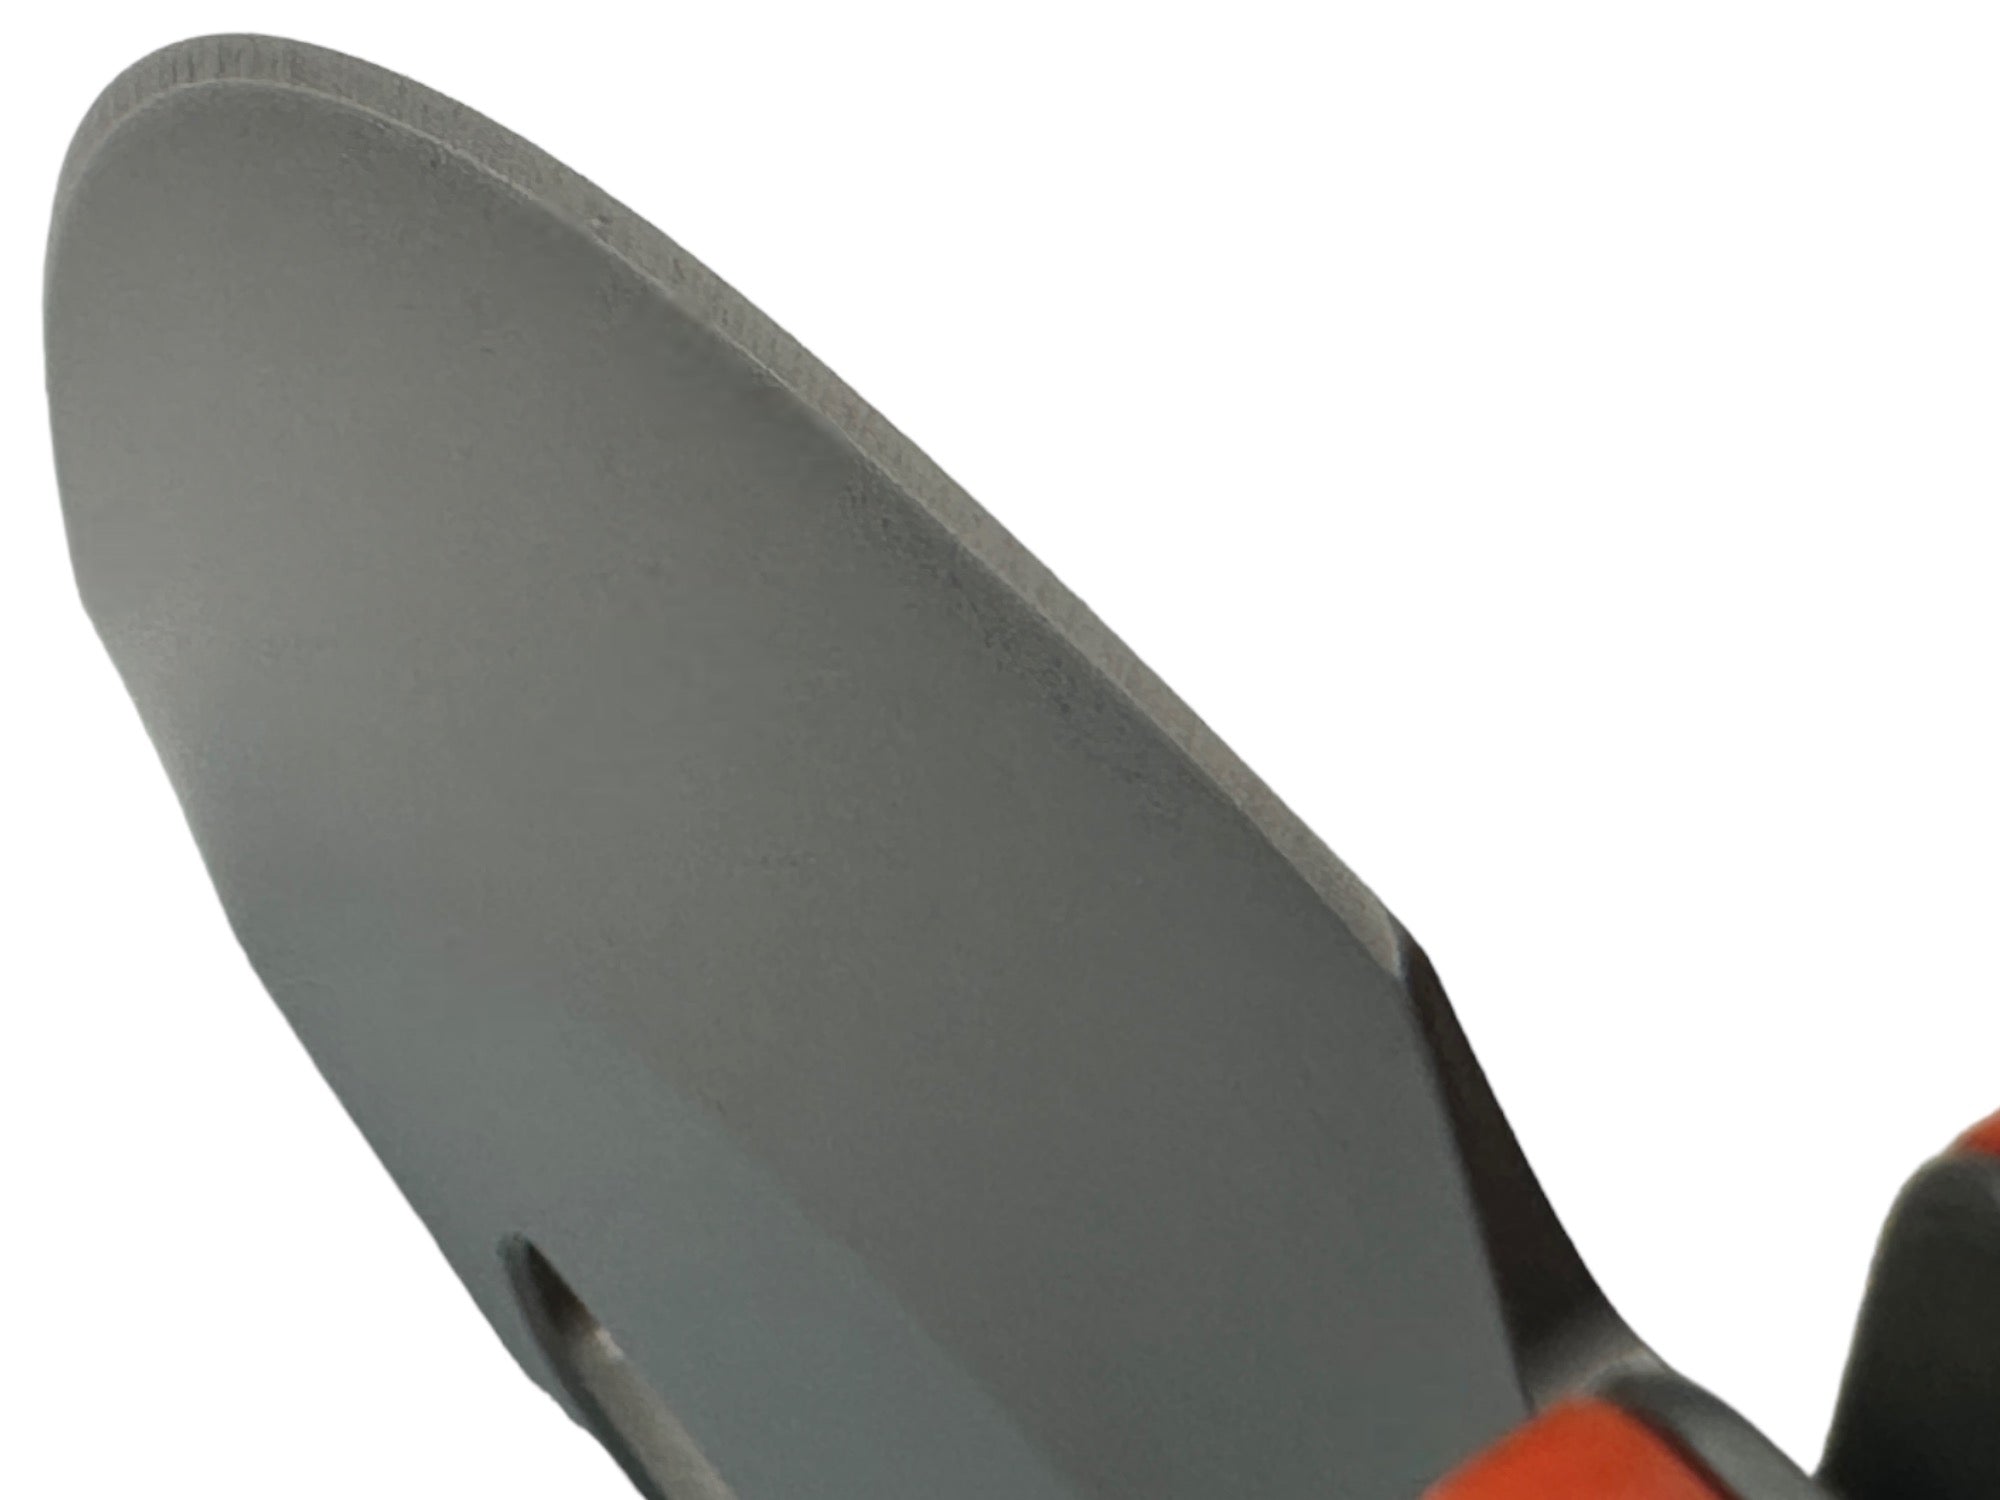 D2 Re-Action - Ti ( Orange - G10 ) Folder - Knife